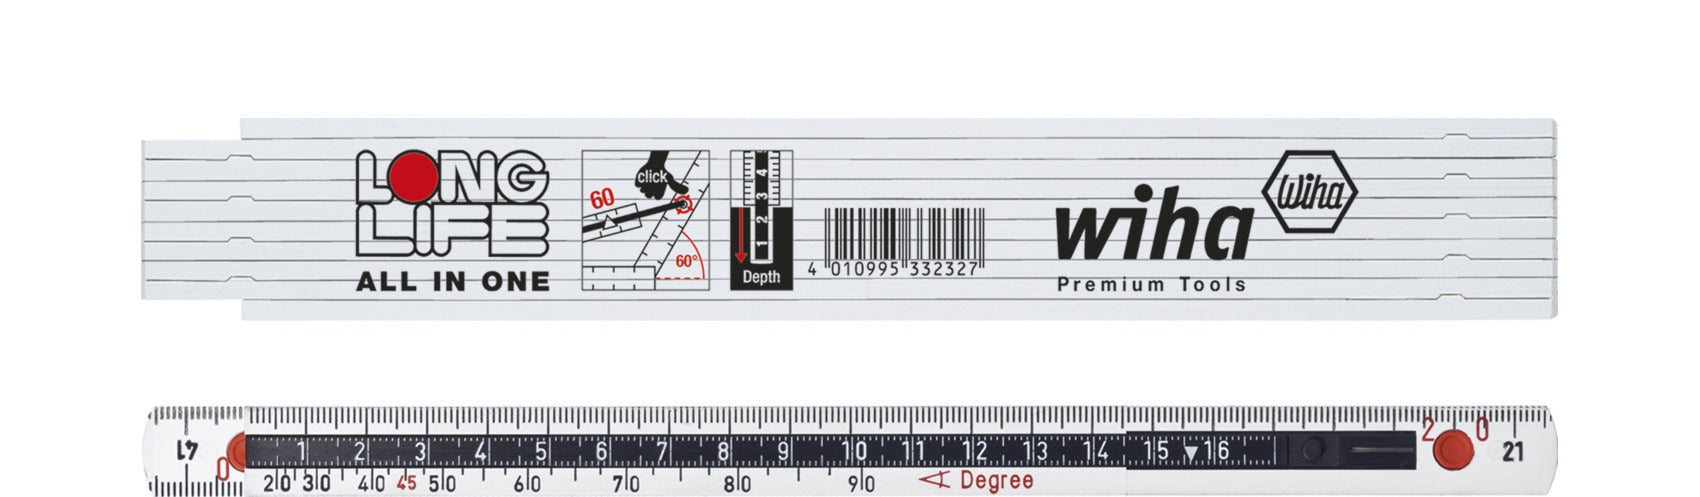 Wiha 33232 Folding Ruler 2m White Metric Plastic Longlife All In One